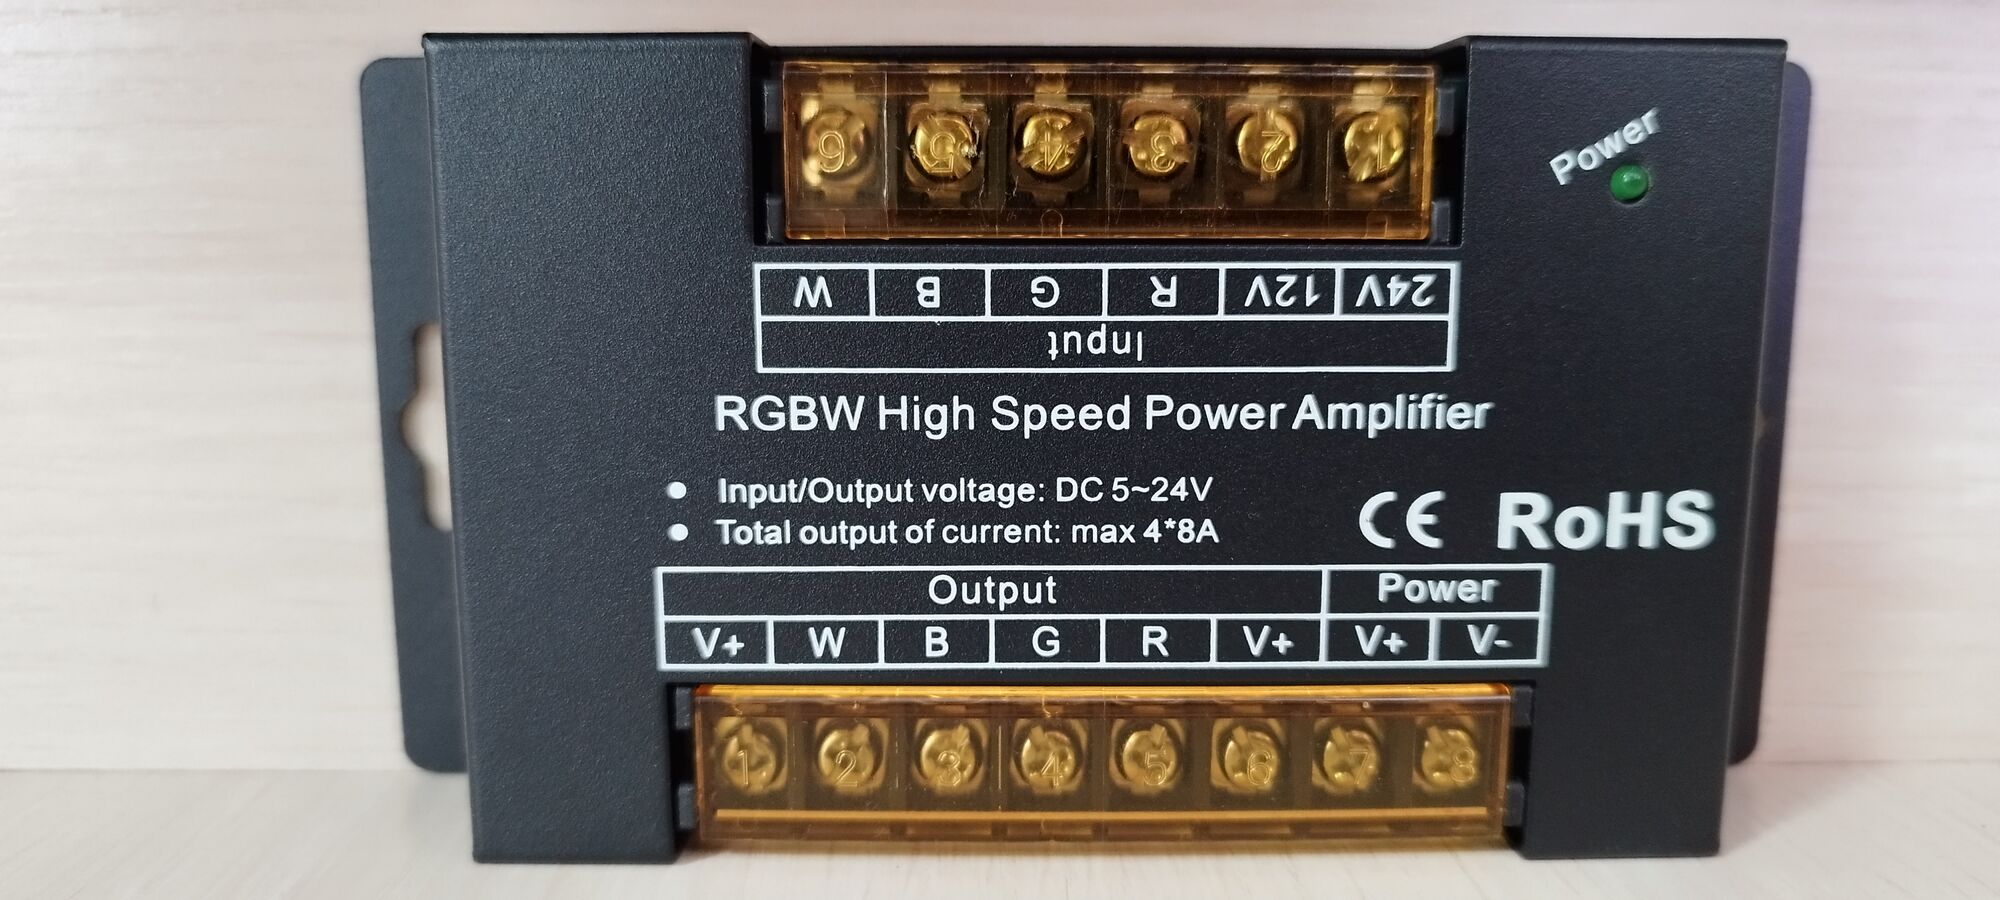 Усилитель RGB+W 5-24V, 32A